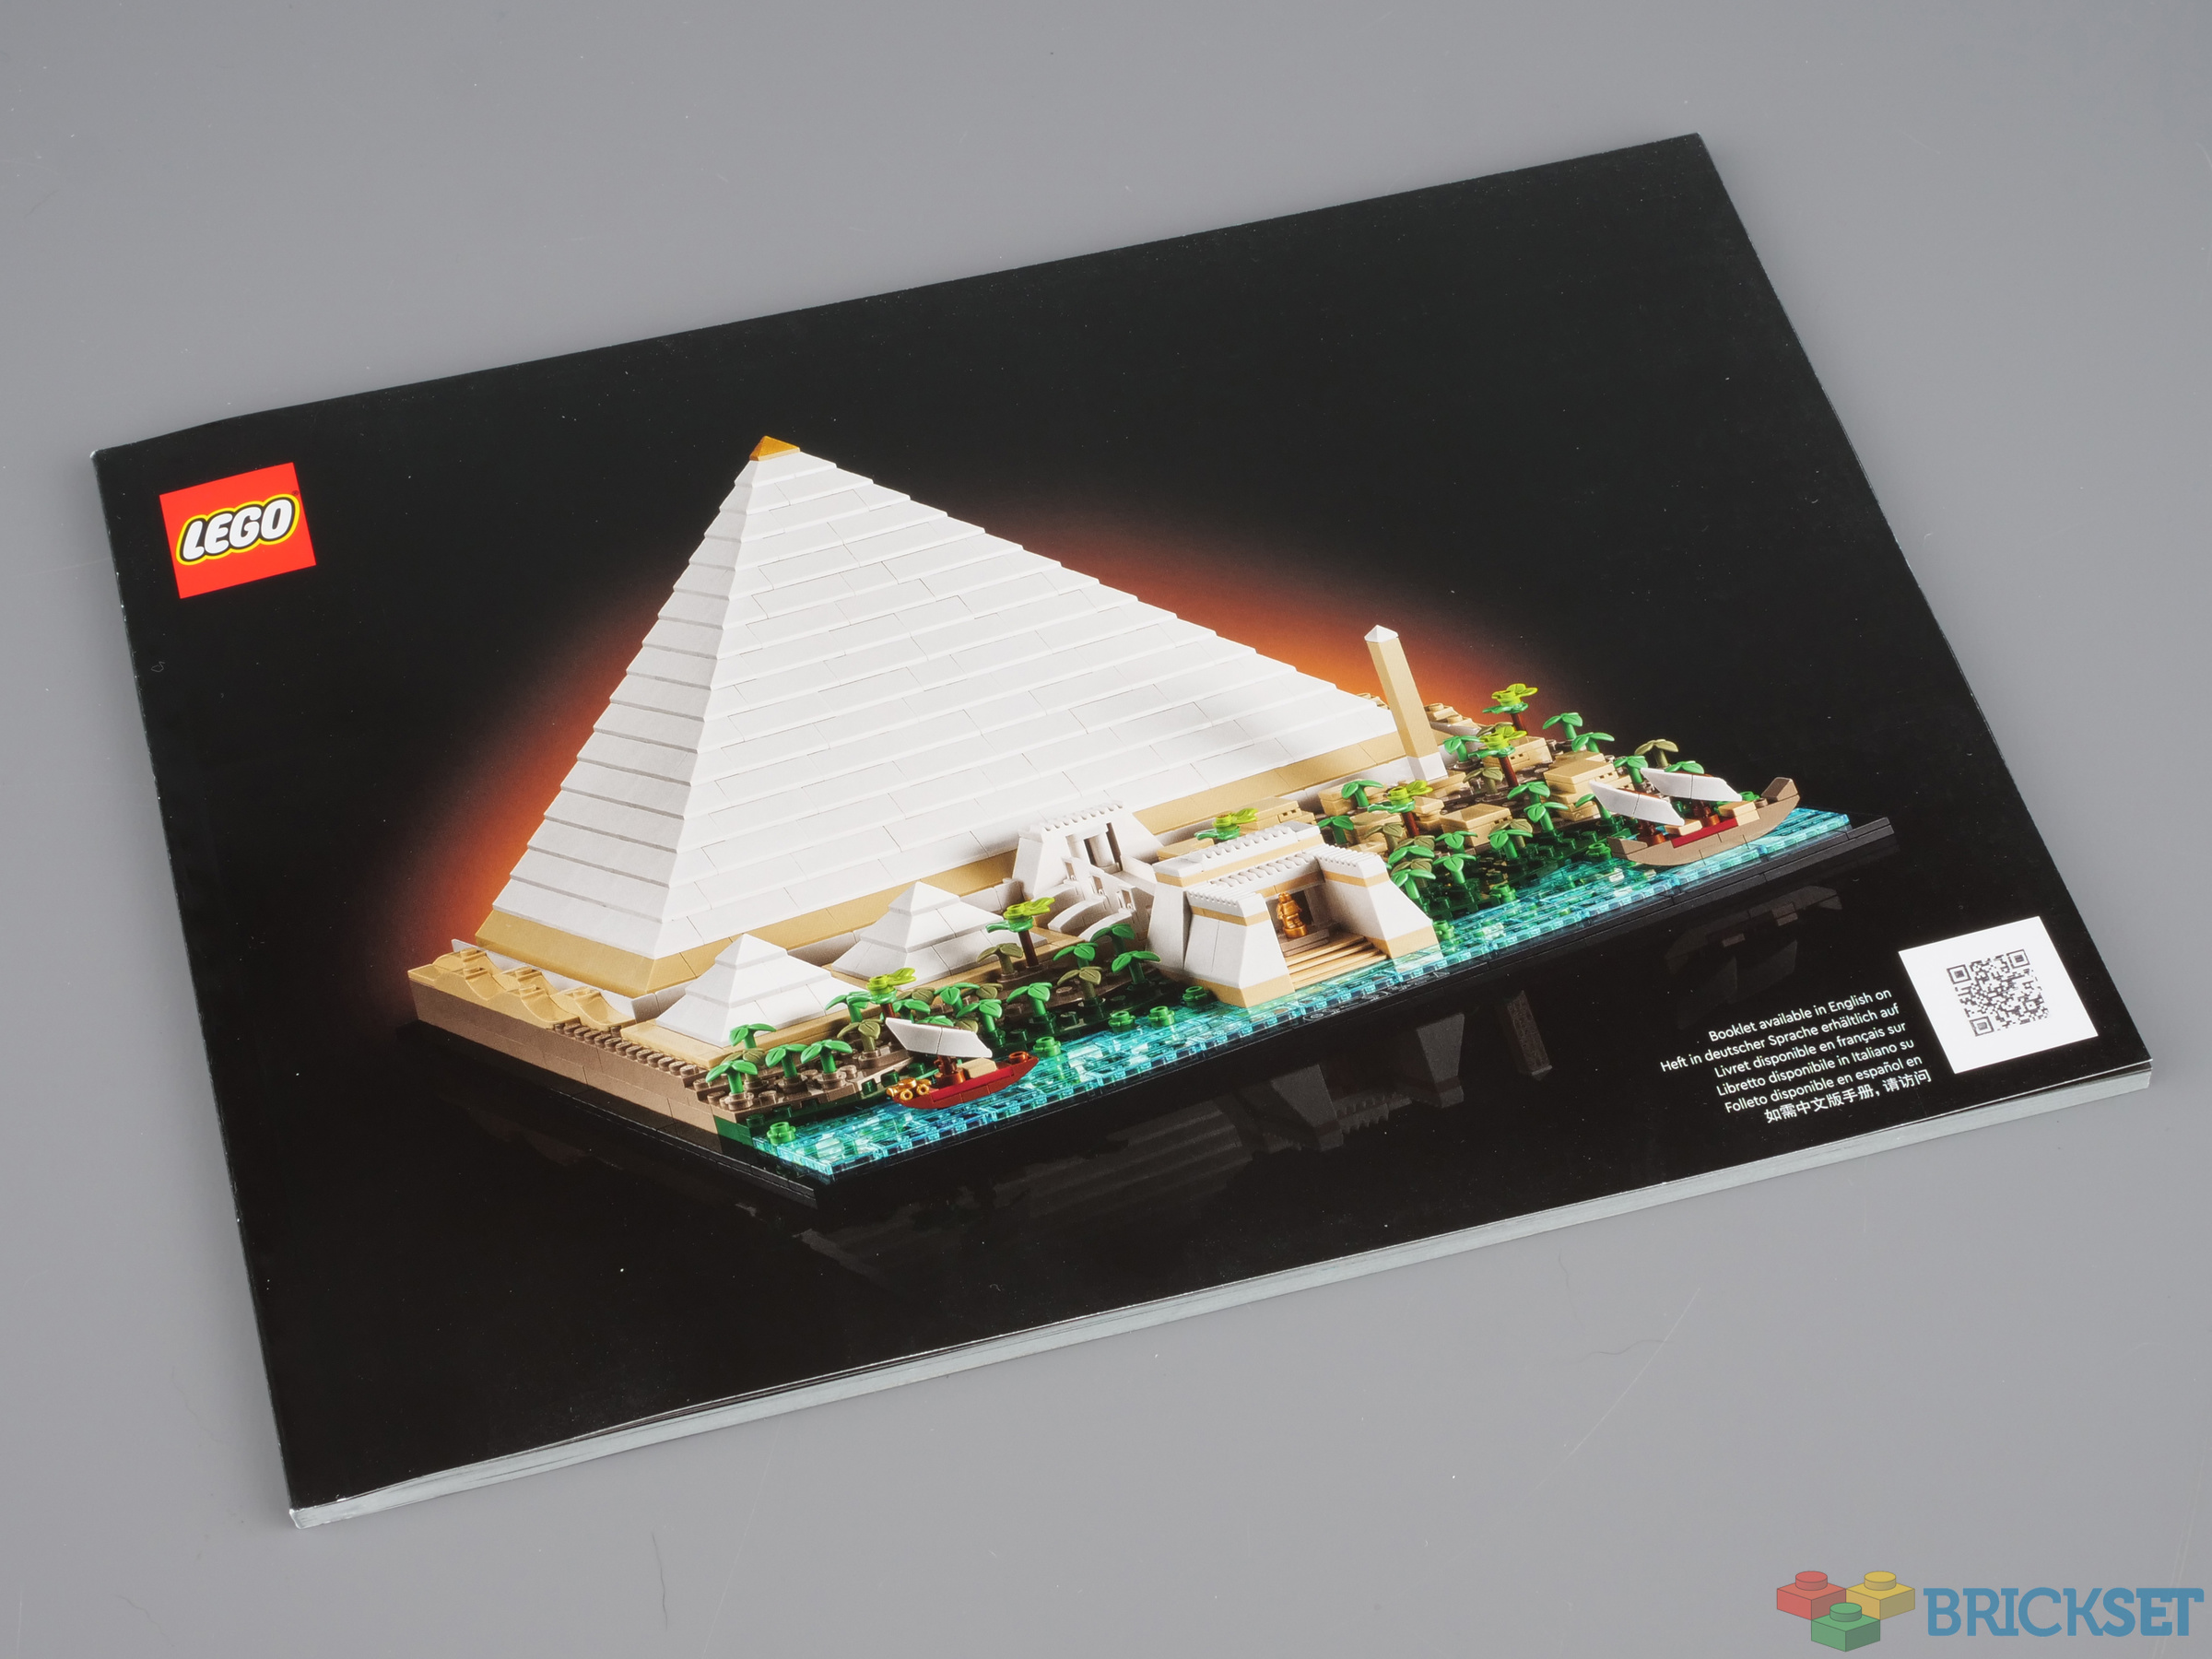 LEGO 21058 The Great Pyramid of Giza review | Brickset